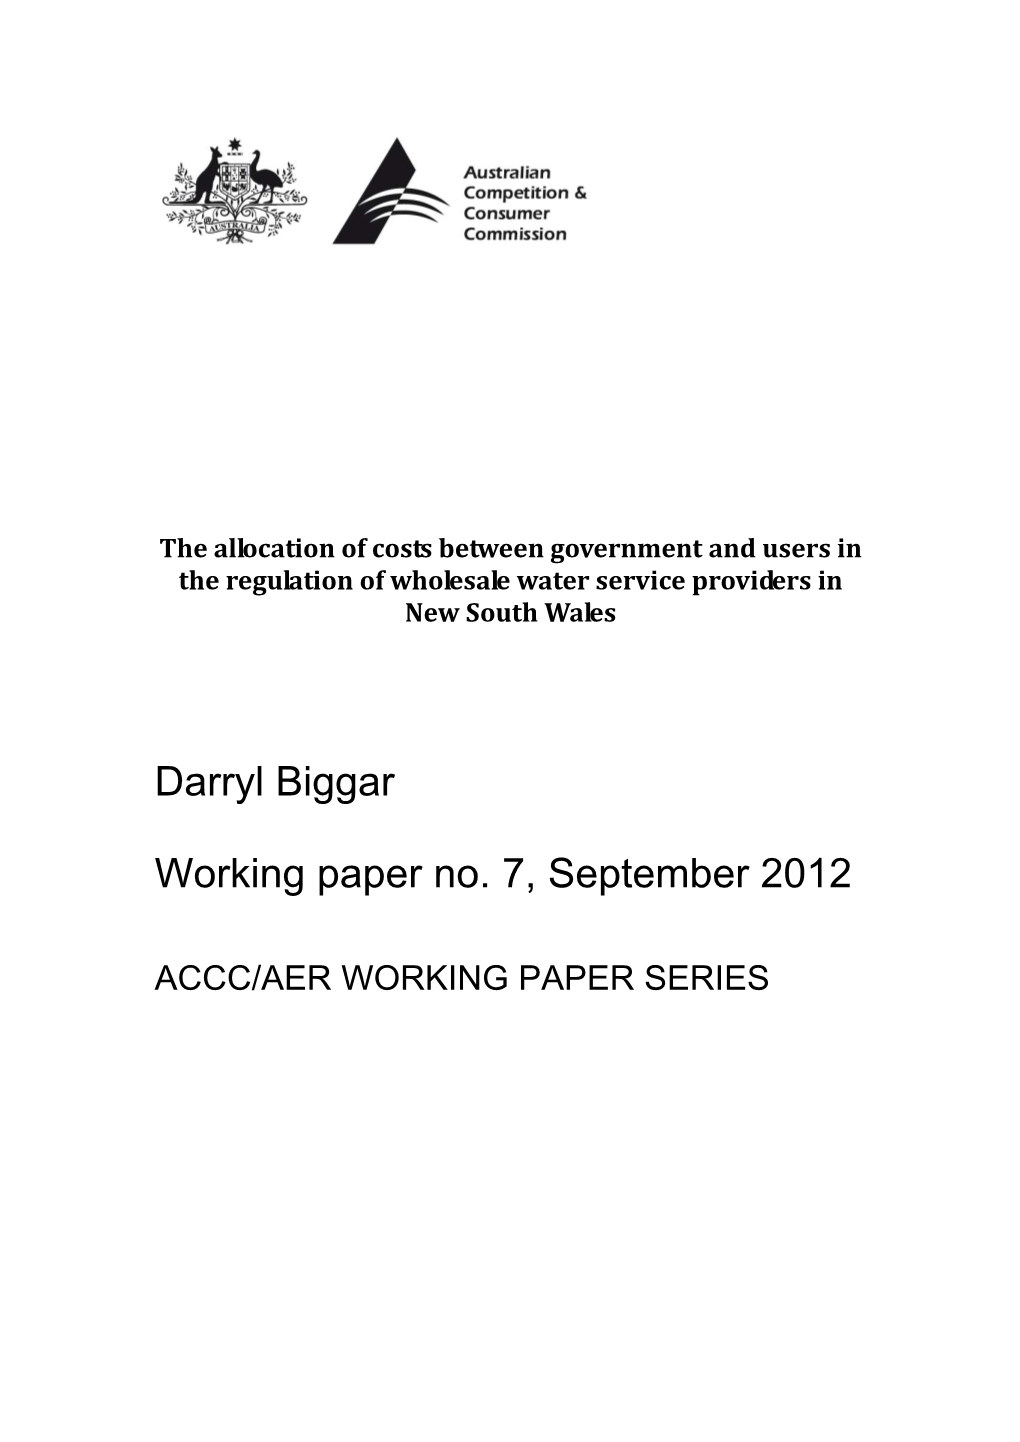 Darryl Biggar Working Paper No. 7, September 2012